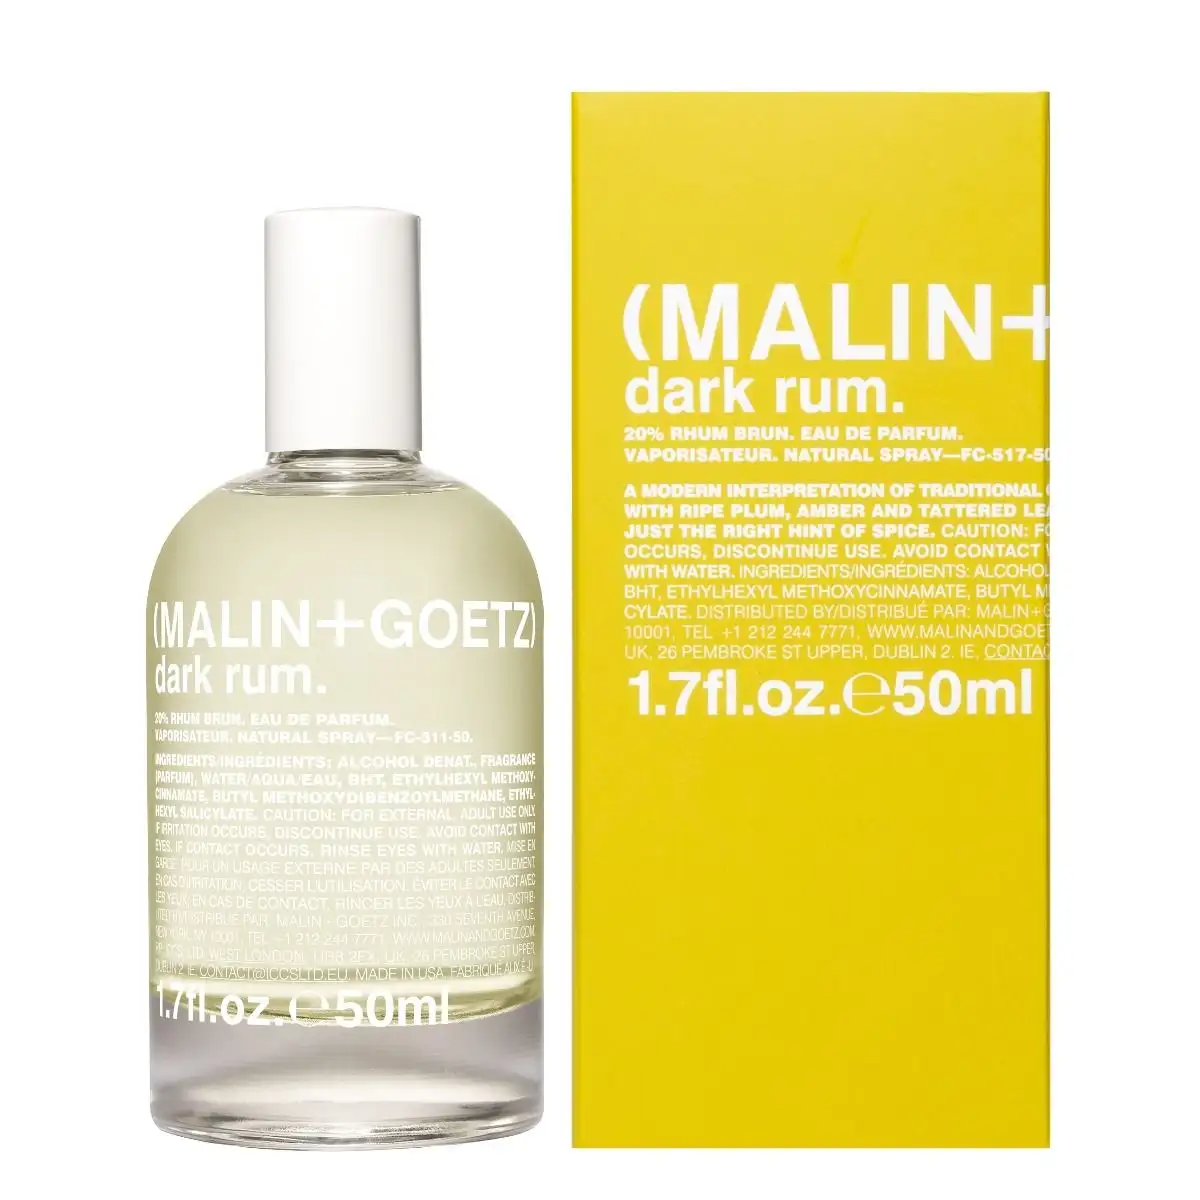 Malin + Goetz bottle and packaging for its Dark Rum parfum.